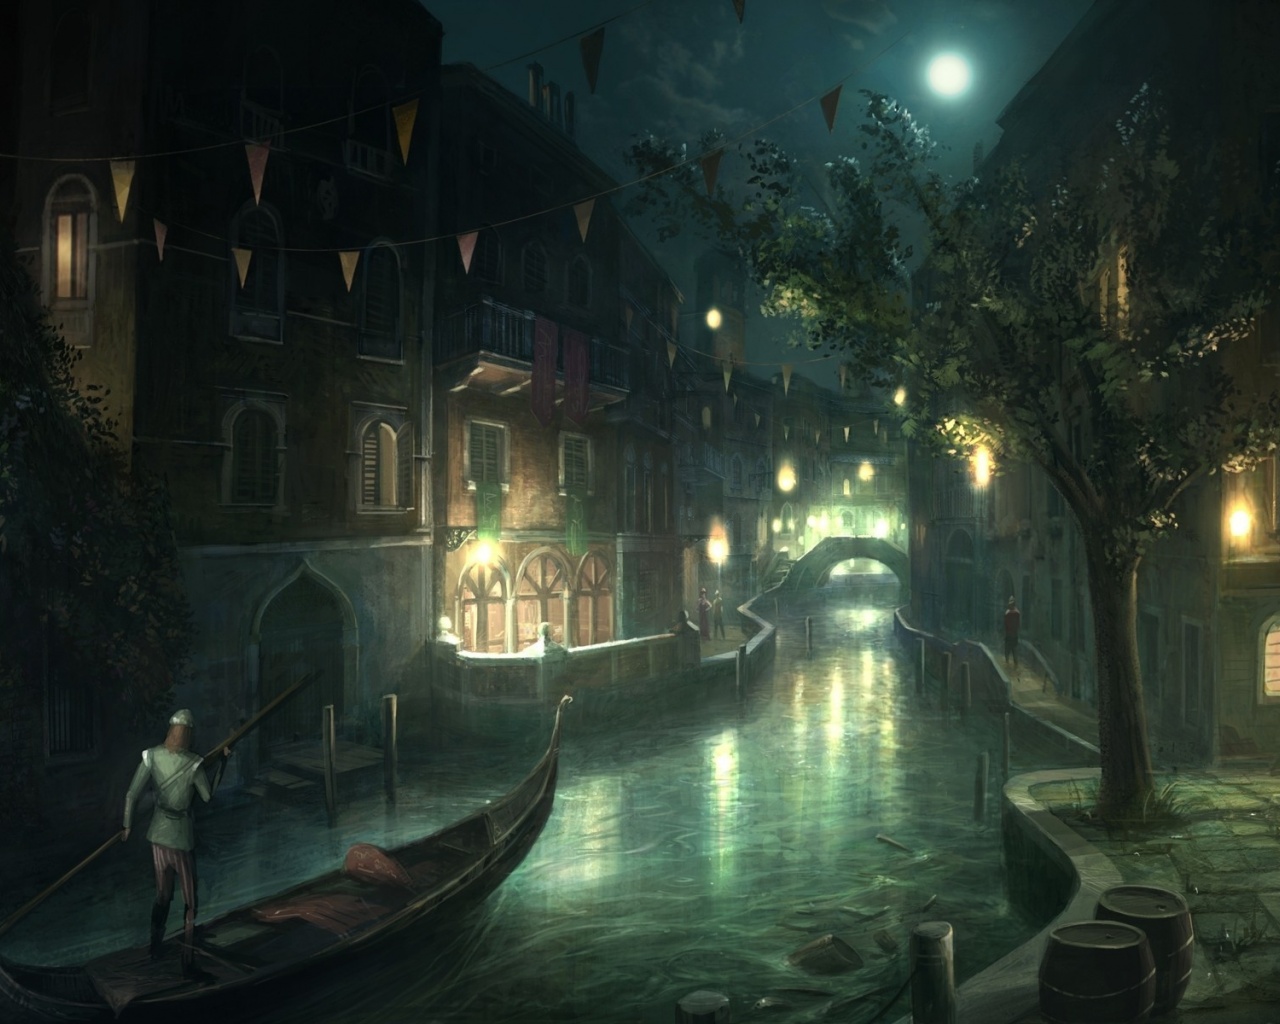 Assassins Creed City Venice Gondola